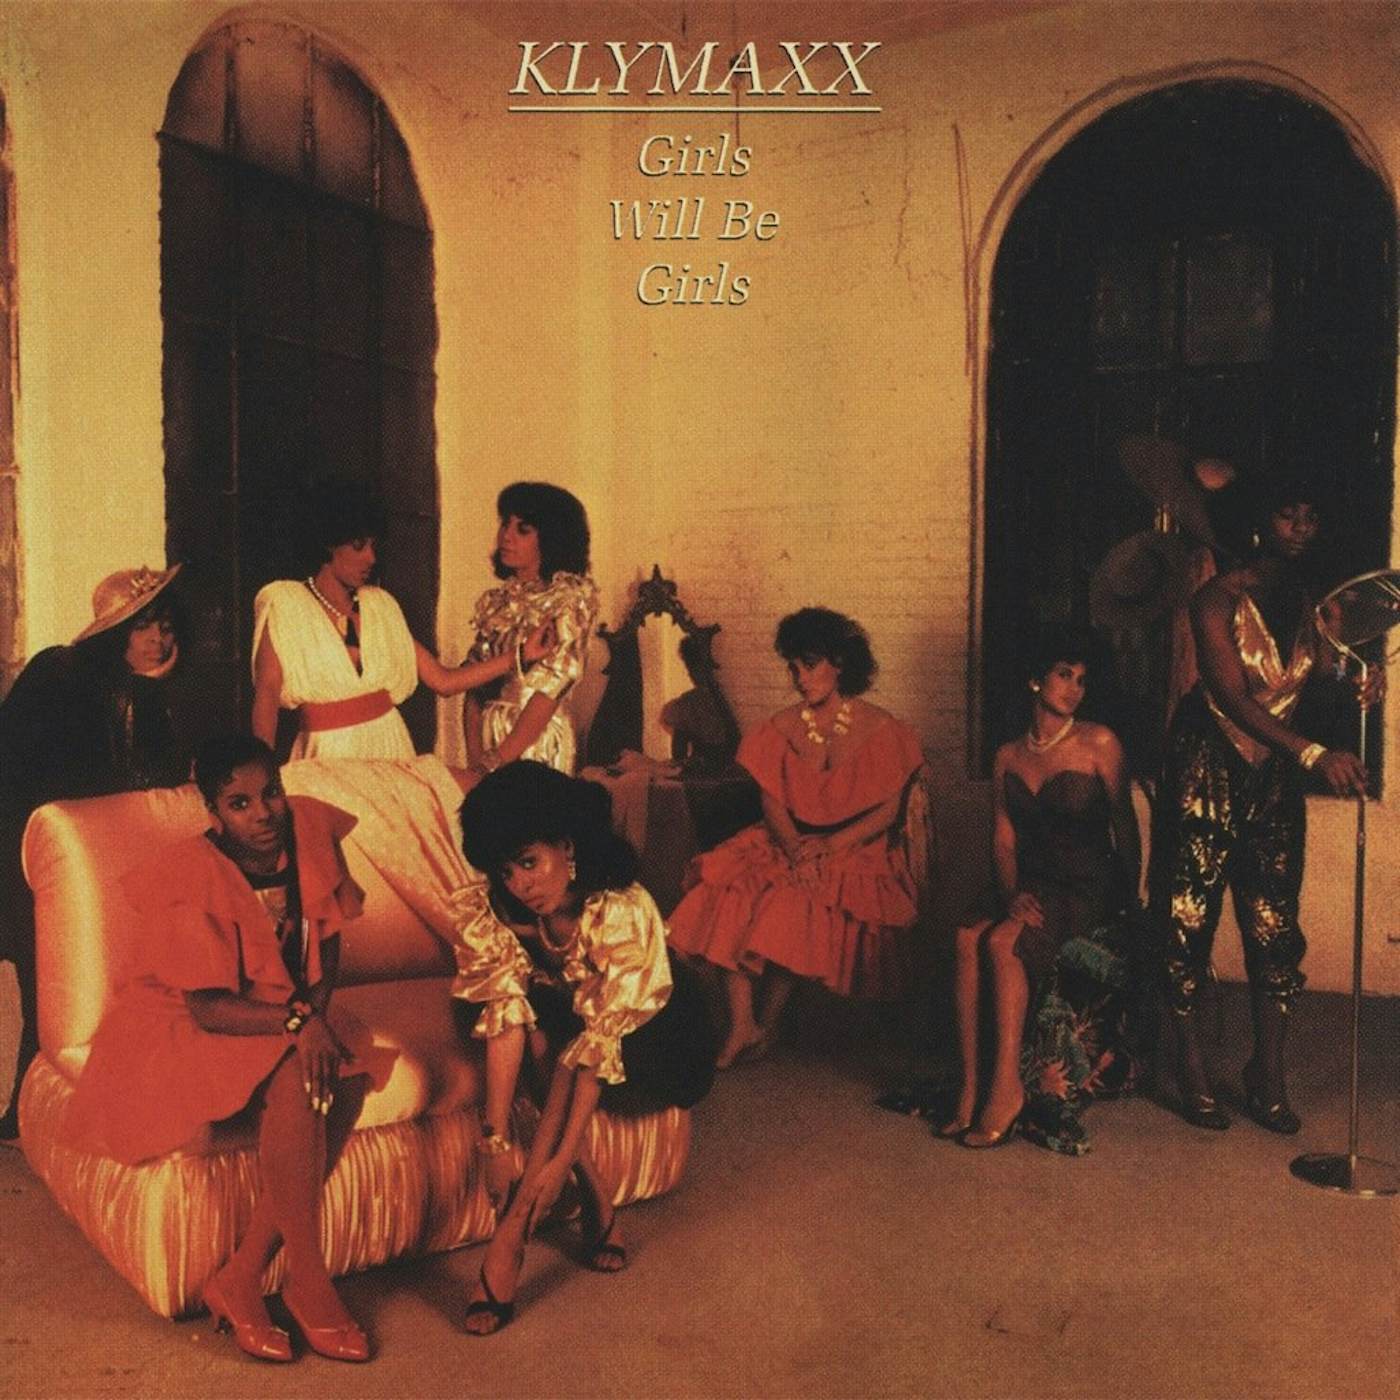 Klymaxx - Girls Will Be Girls